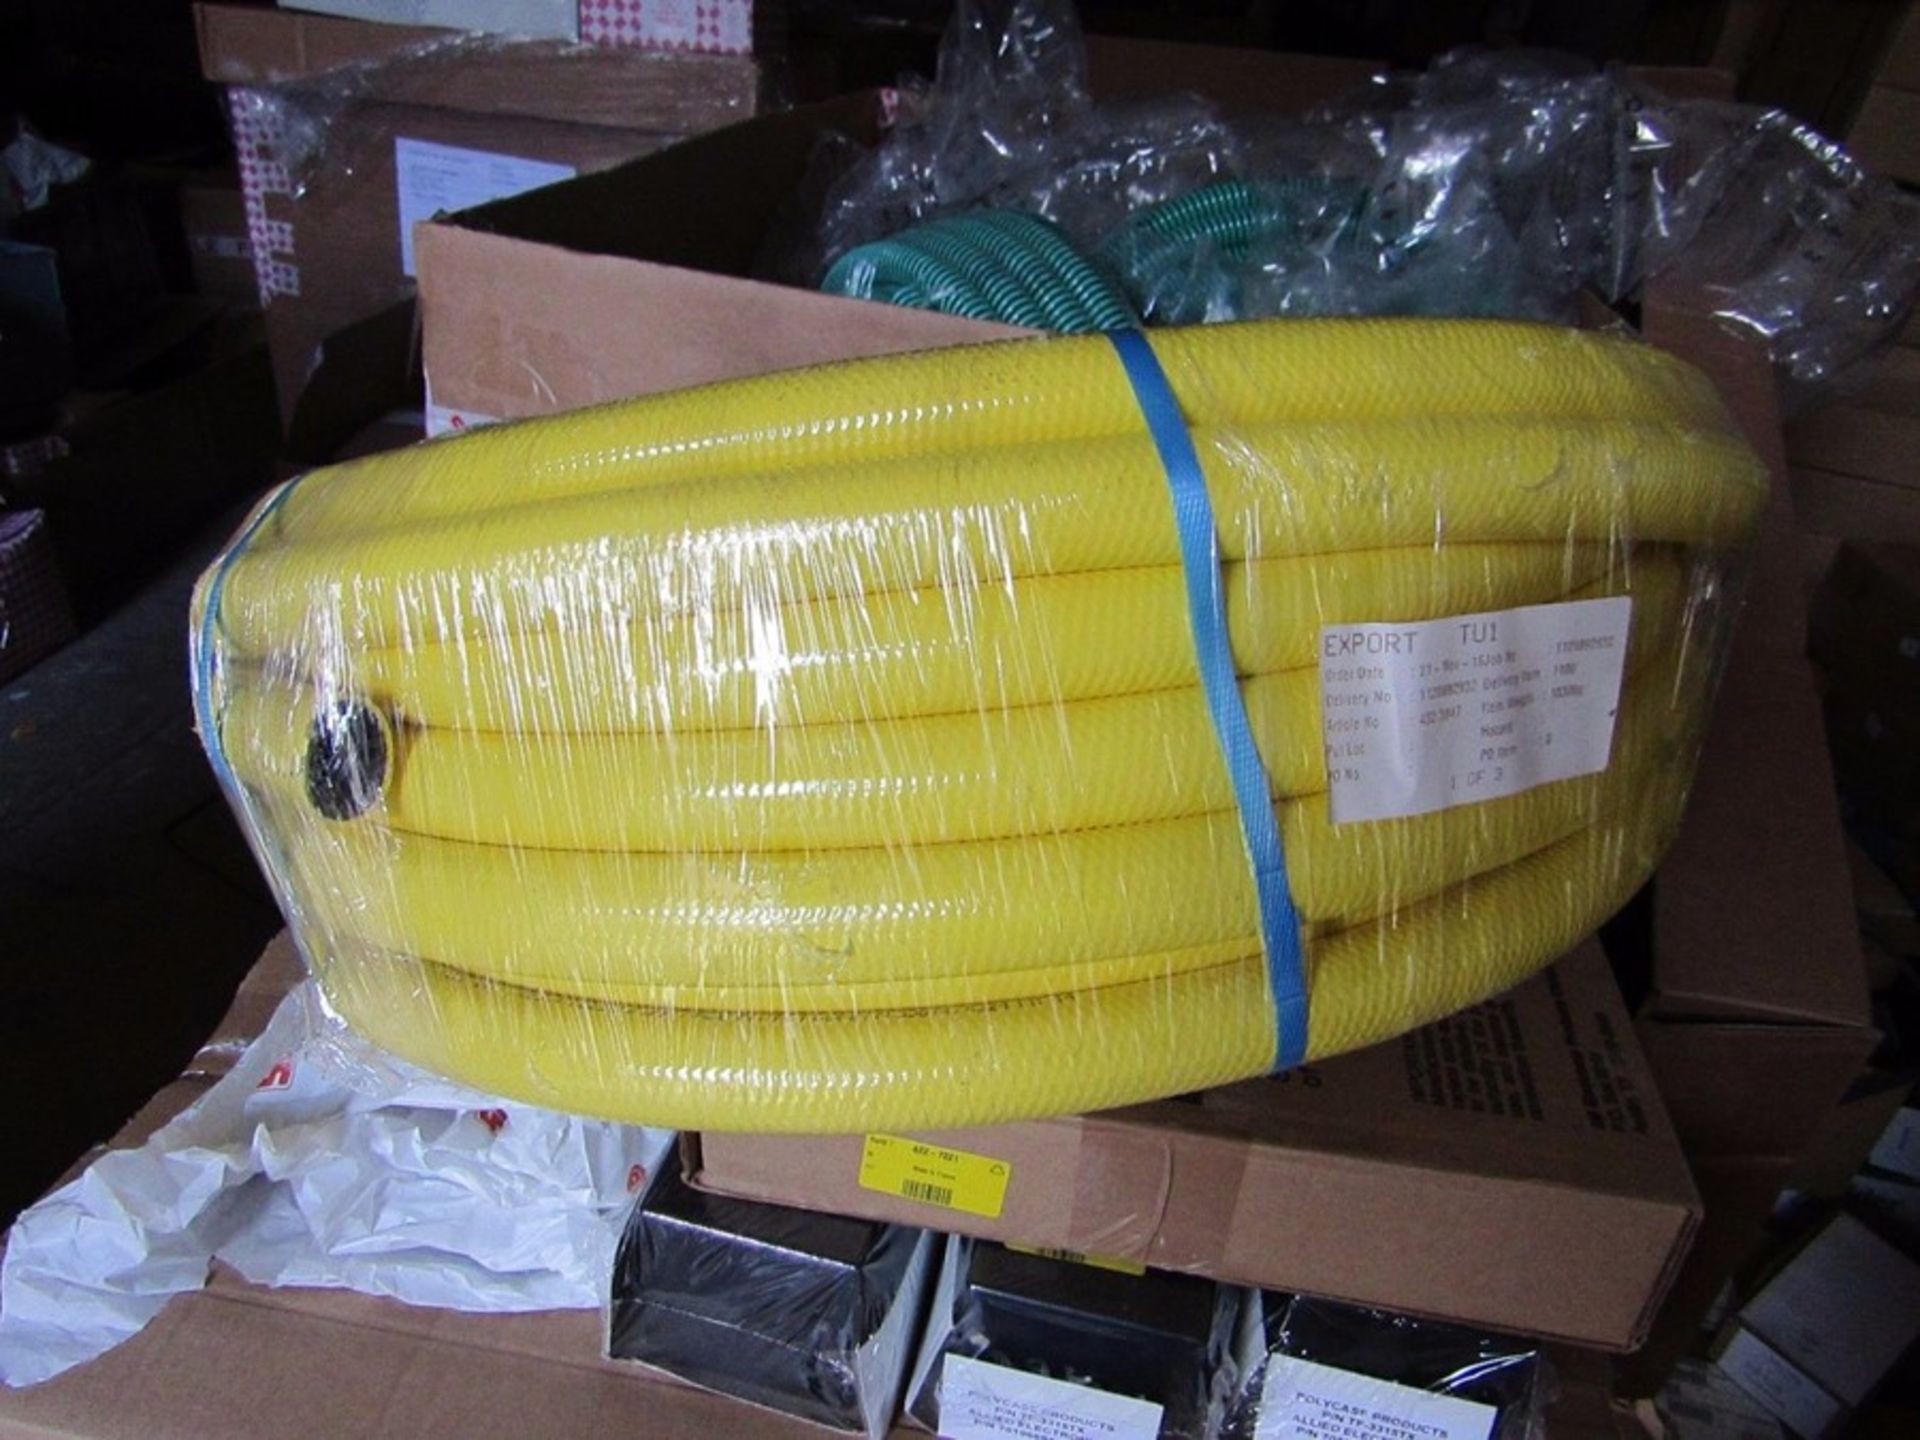 25m x Merlett Plastics Yellow PVC Flexible Hose Tubing 33mm Ext Dia 1005 4323947 - Image 2 of 2